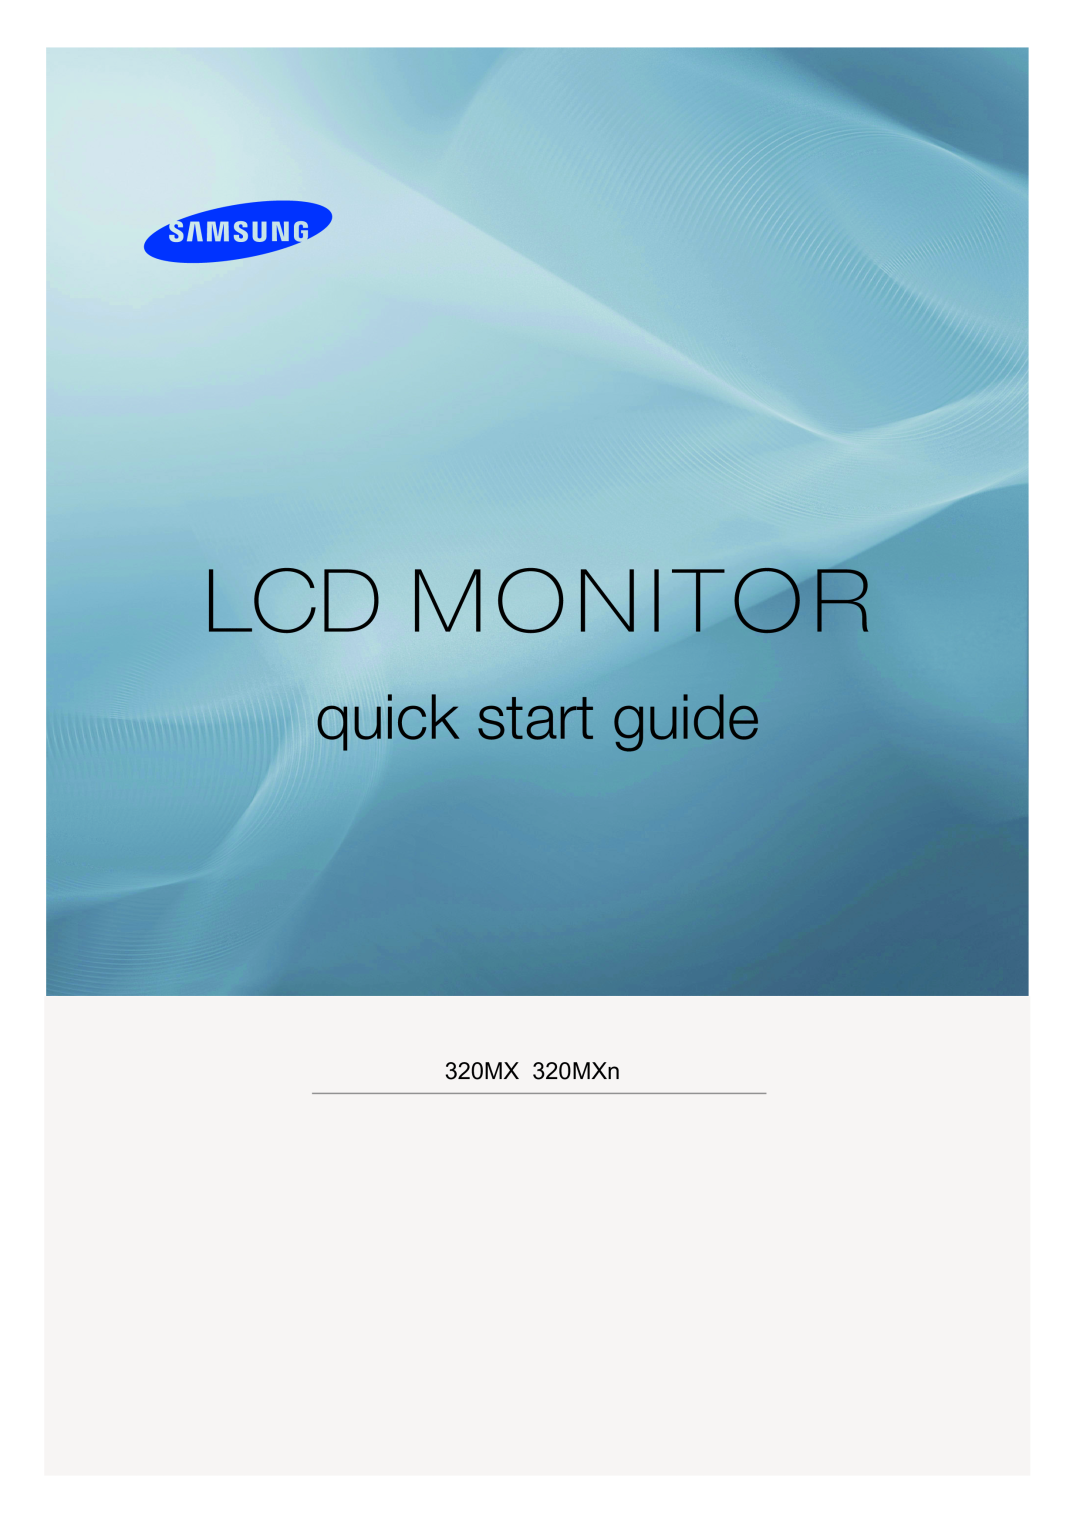 Samsung quick start Lcd Monitor, quick start guide, 320MX 320MXn 